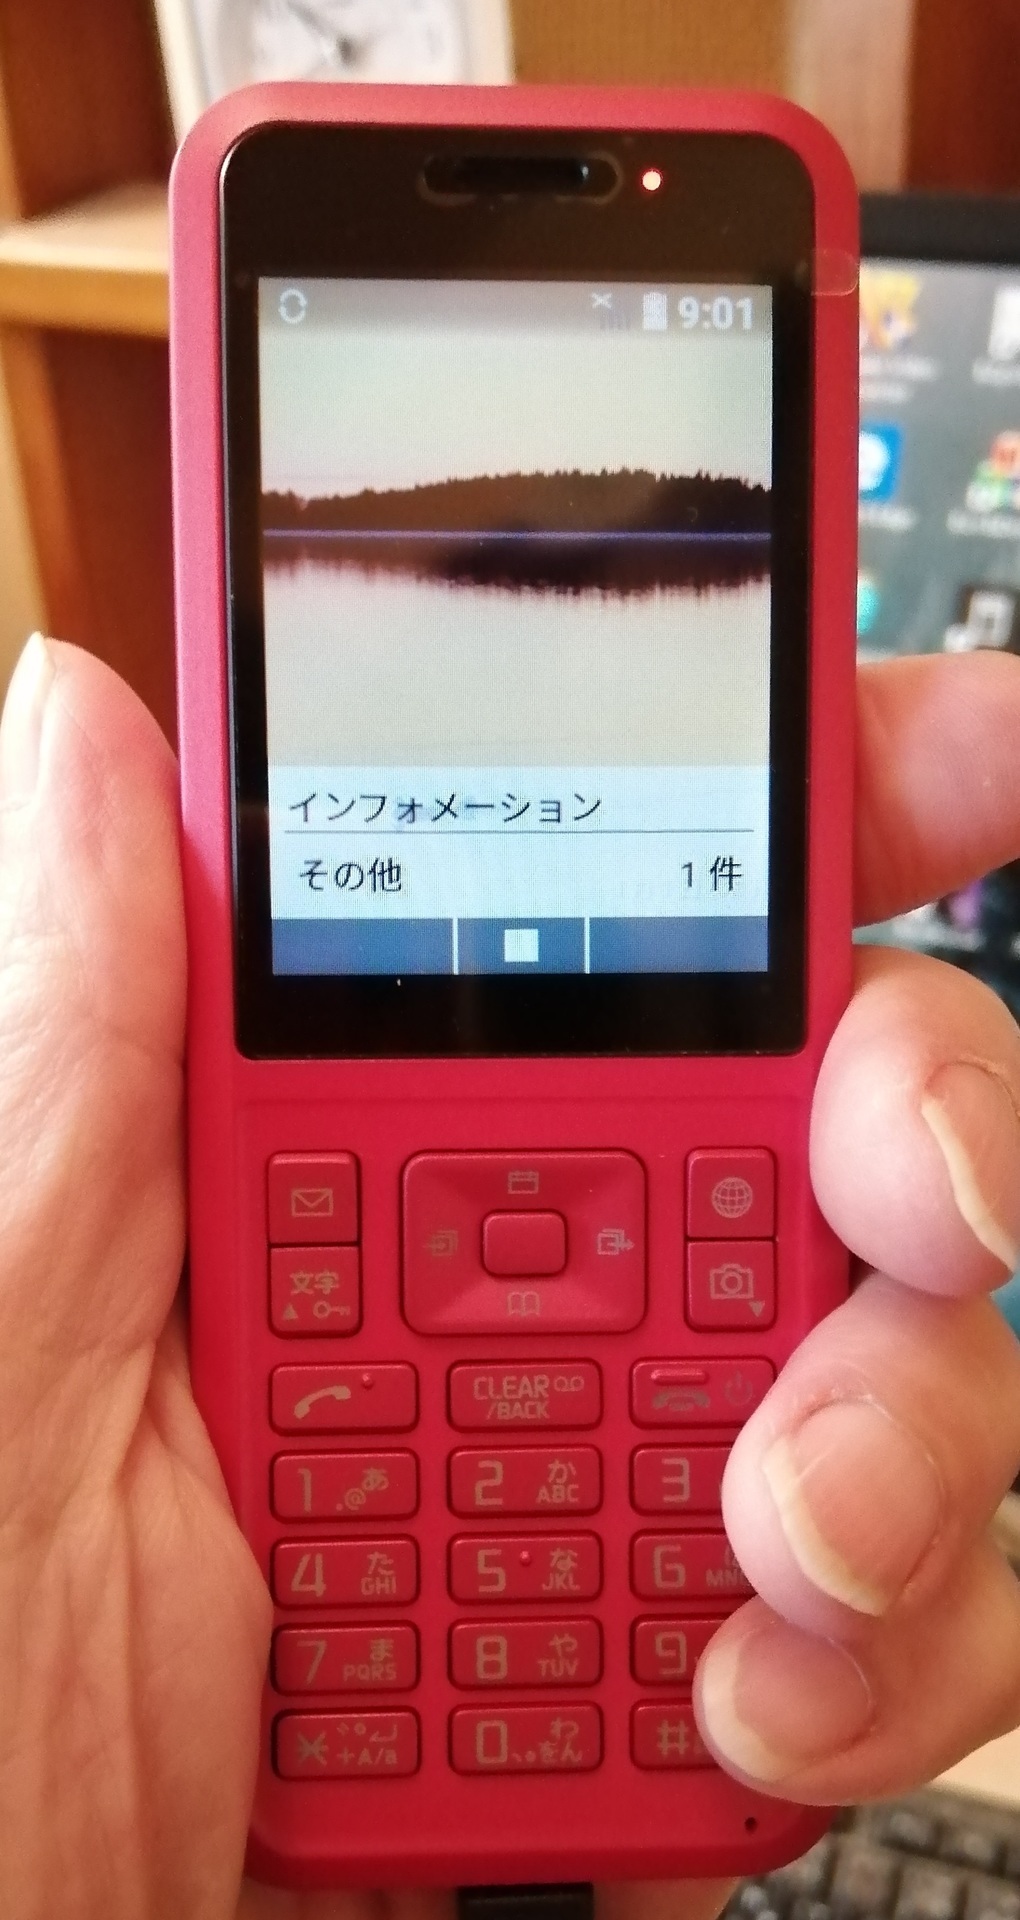 Softbankのプリペイド携帯 シンプルスタイル 月額基本料金0円が凄すぎる Ken